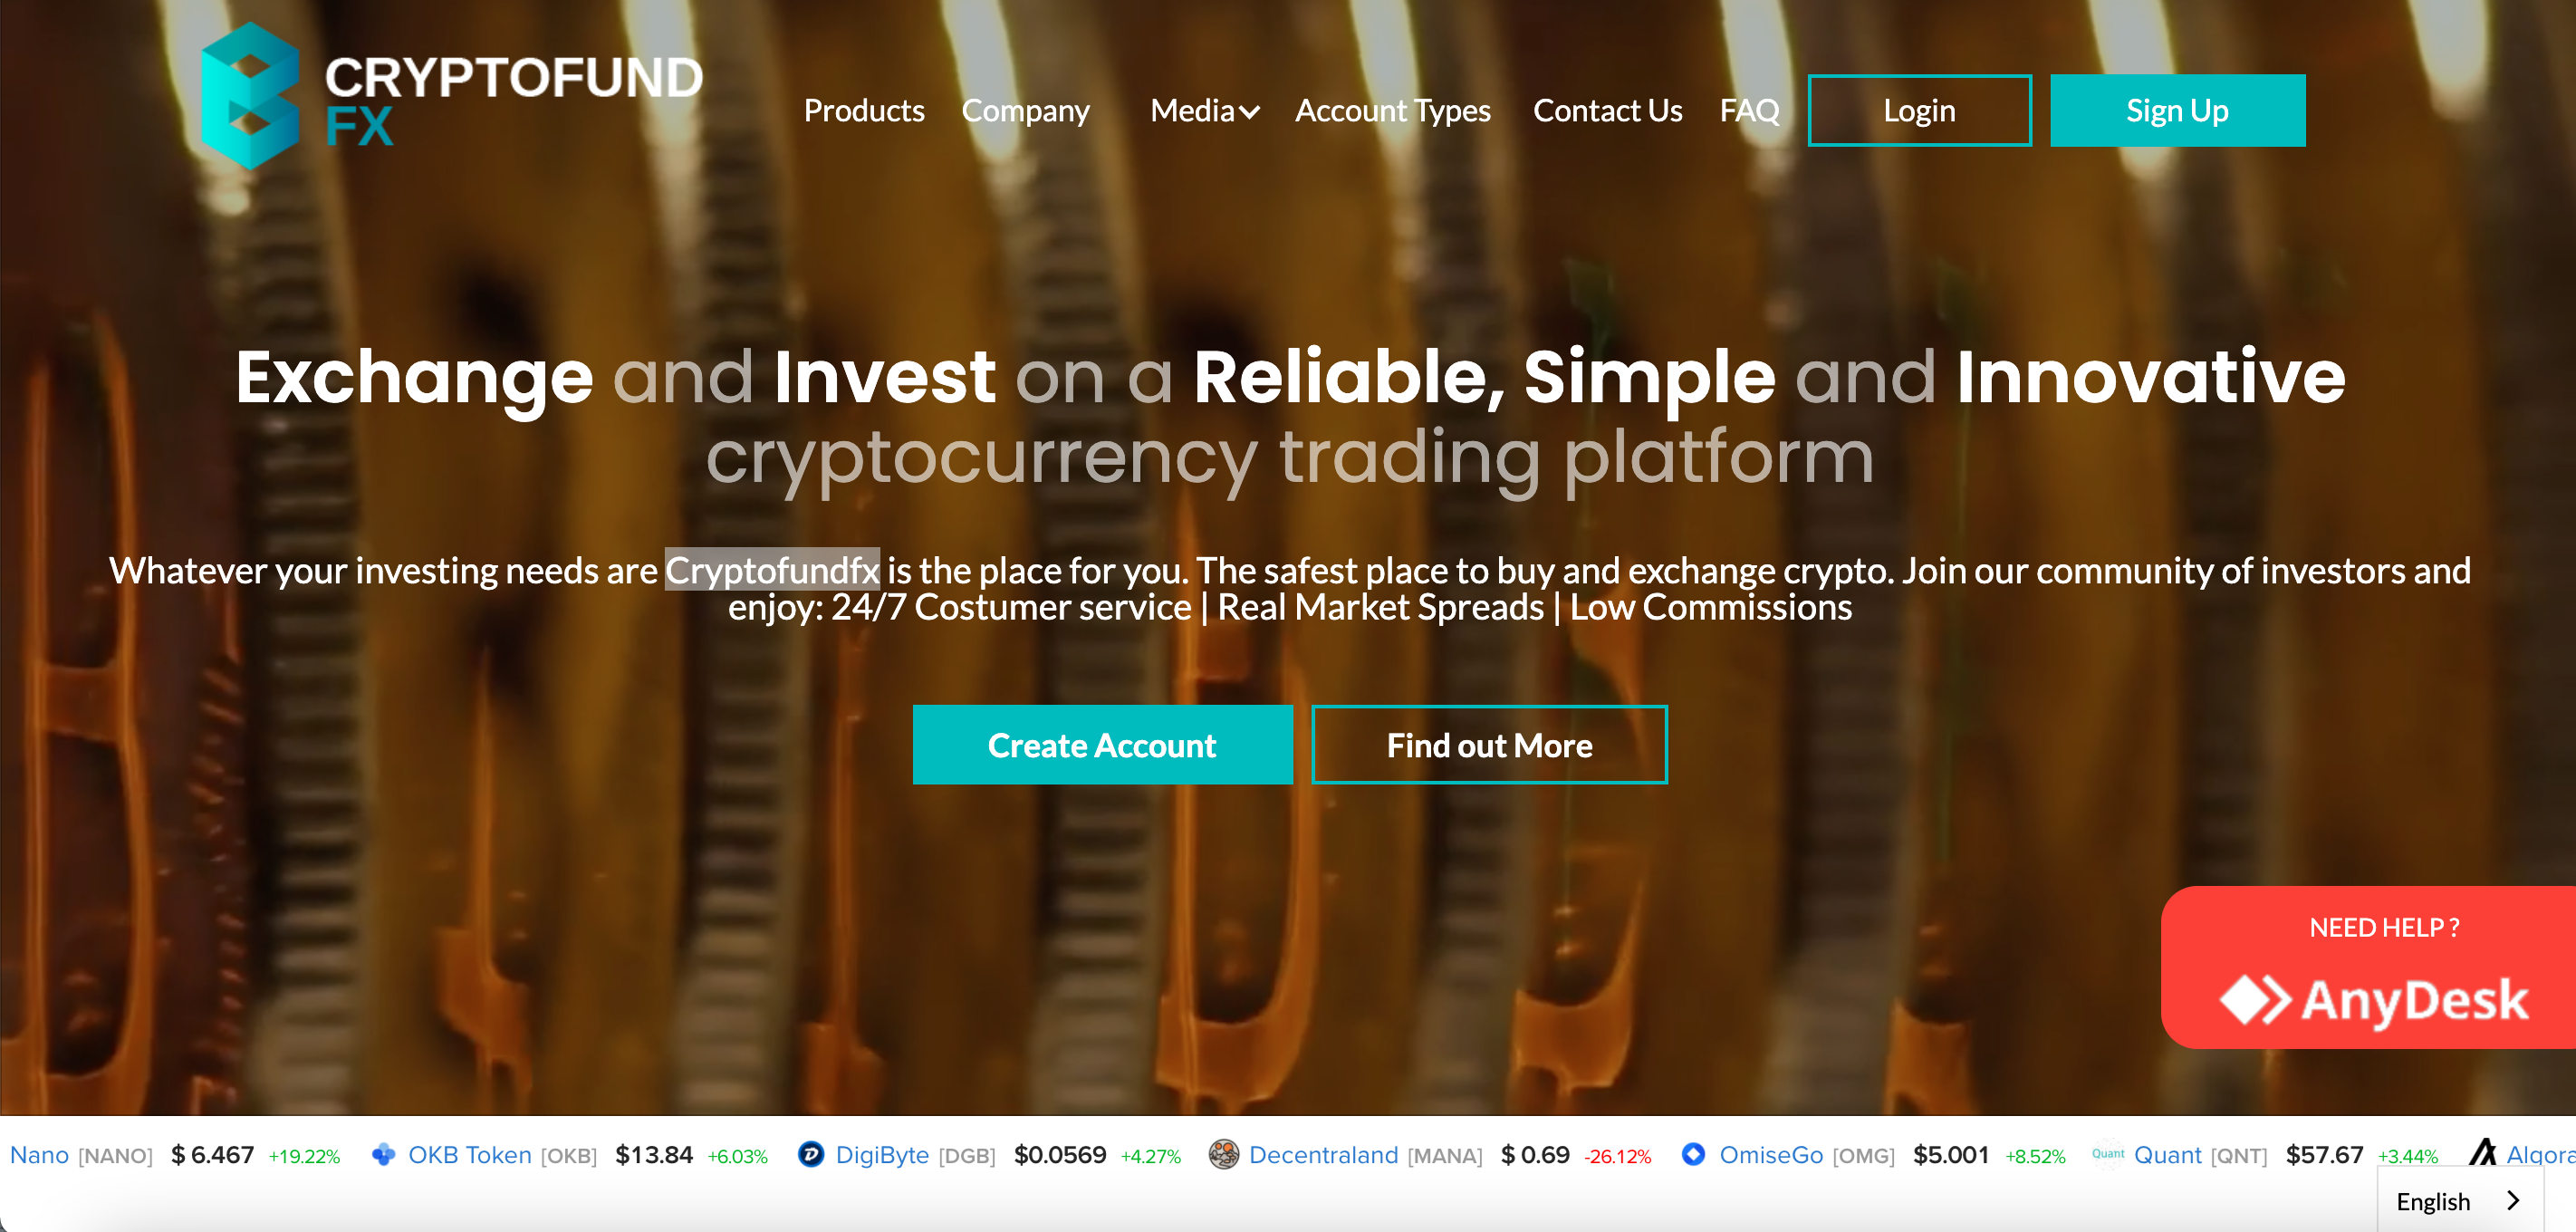 Crypto fund fx website